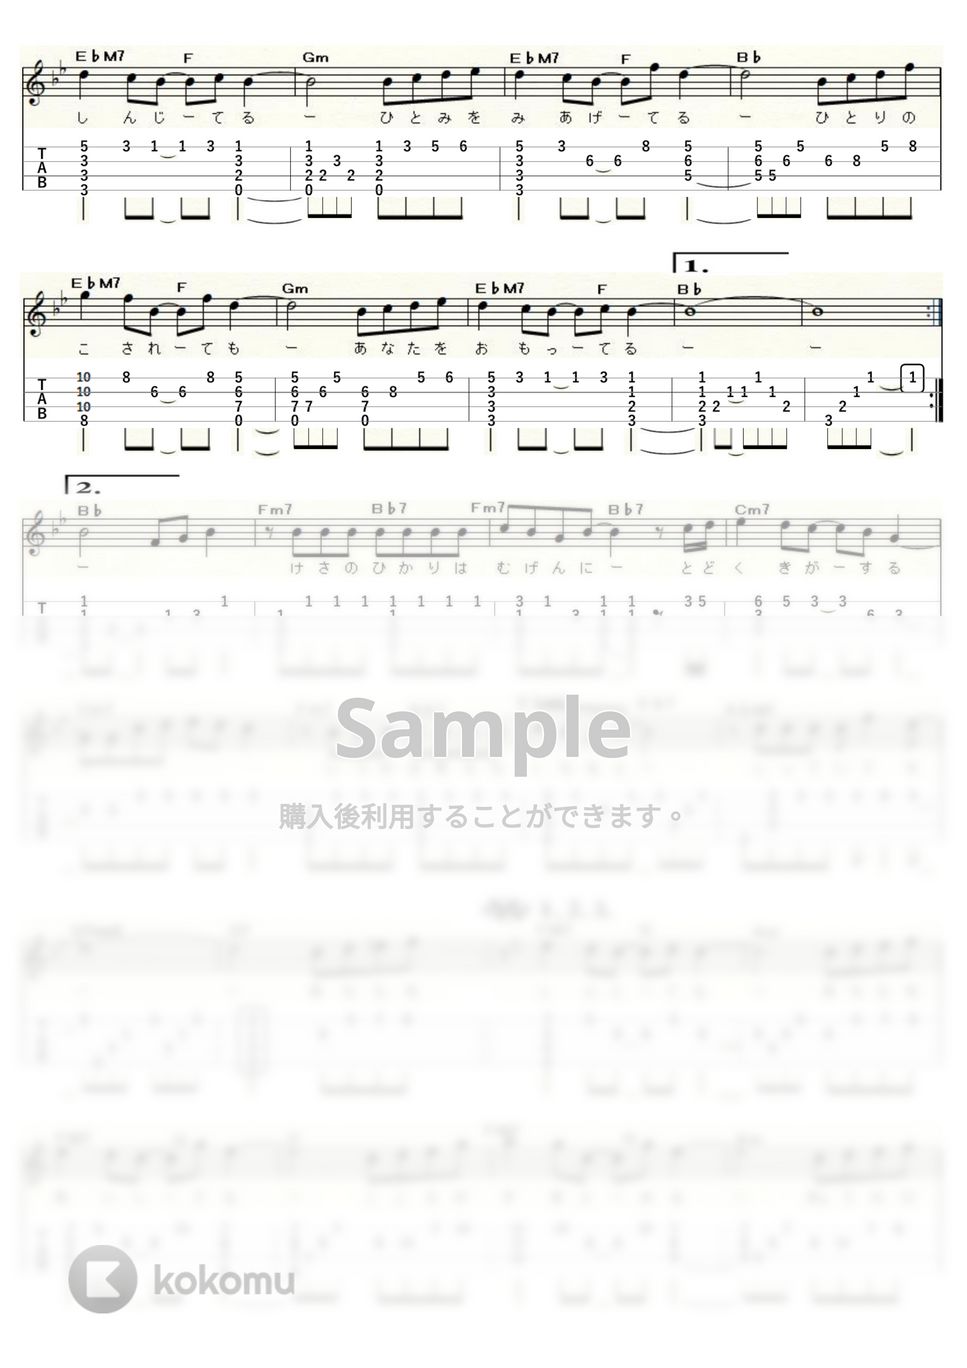 松任谷 由実 - ANNIVERSARY (ｳｸﾚﾚｿﾛ / Low-G / 中級) by ukulelepapa